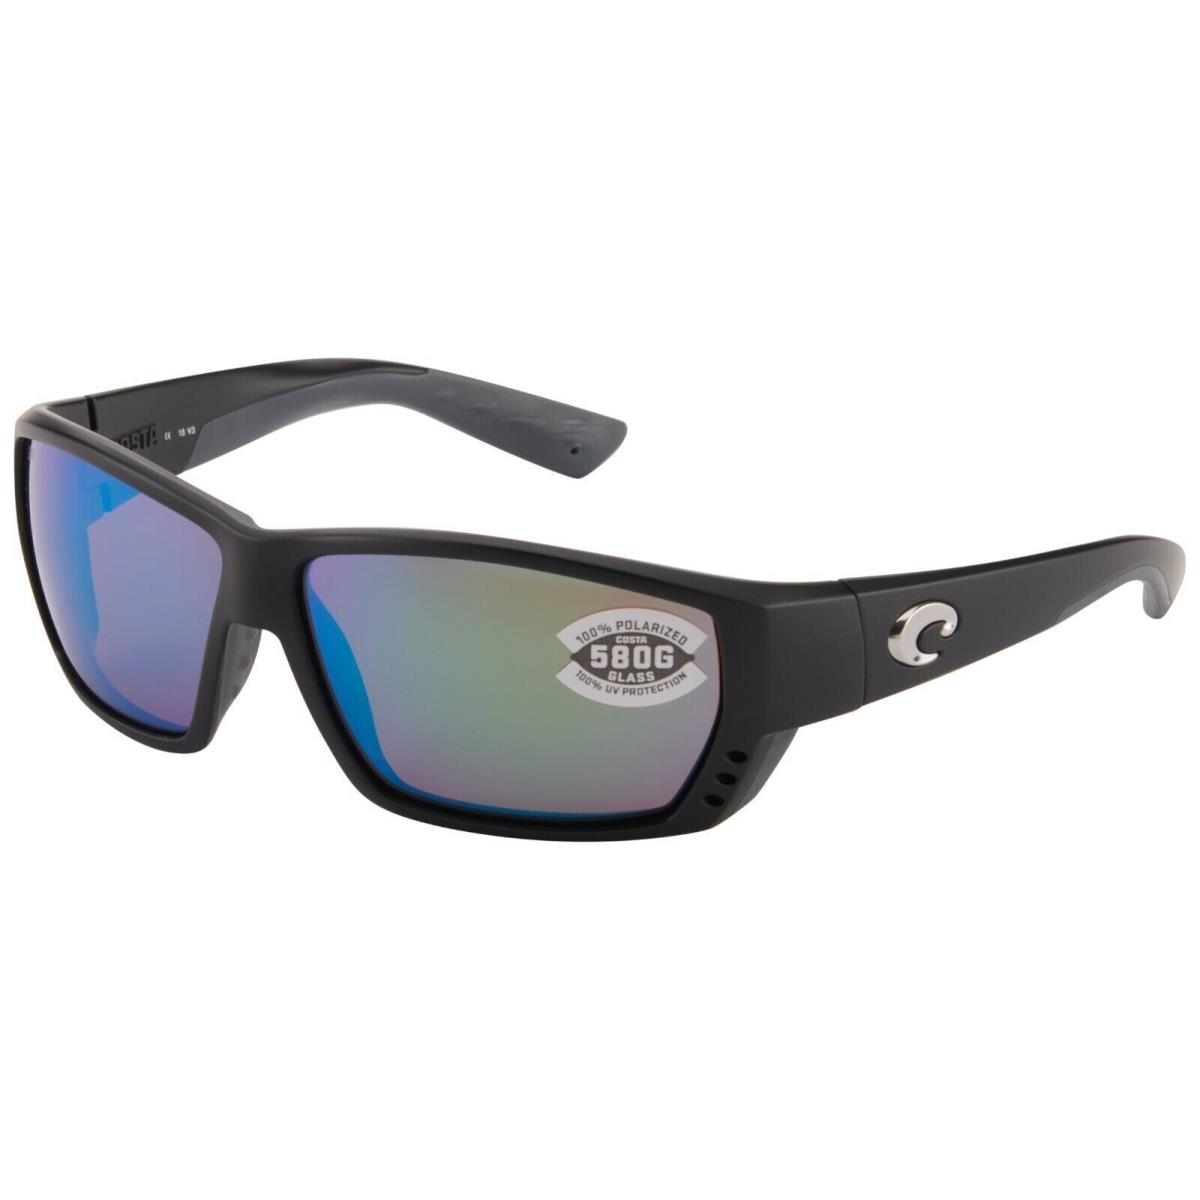 Costa Del Mar TA 11 Ogmglp Tuna Alley Sunglasses Matte Black Green Mirror 580G - Frame: Black, Lens: Green